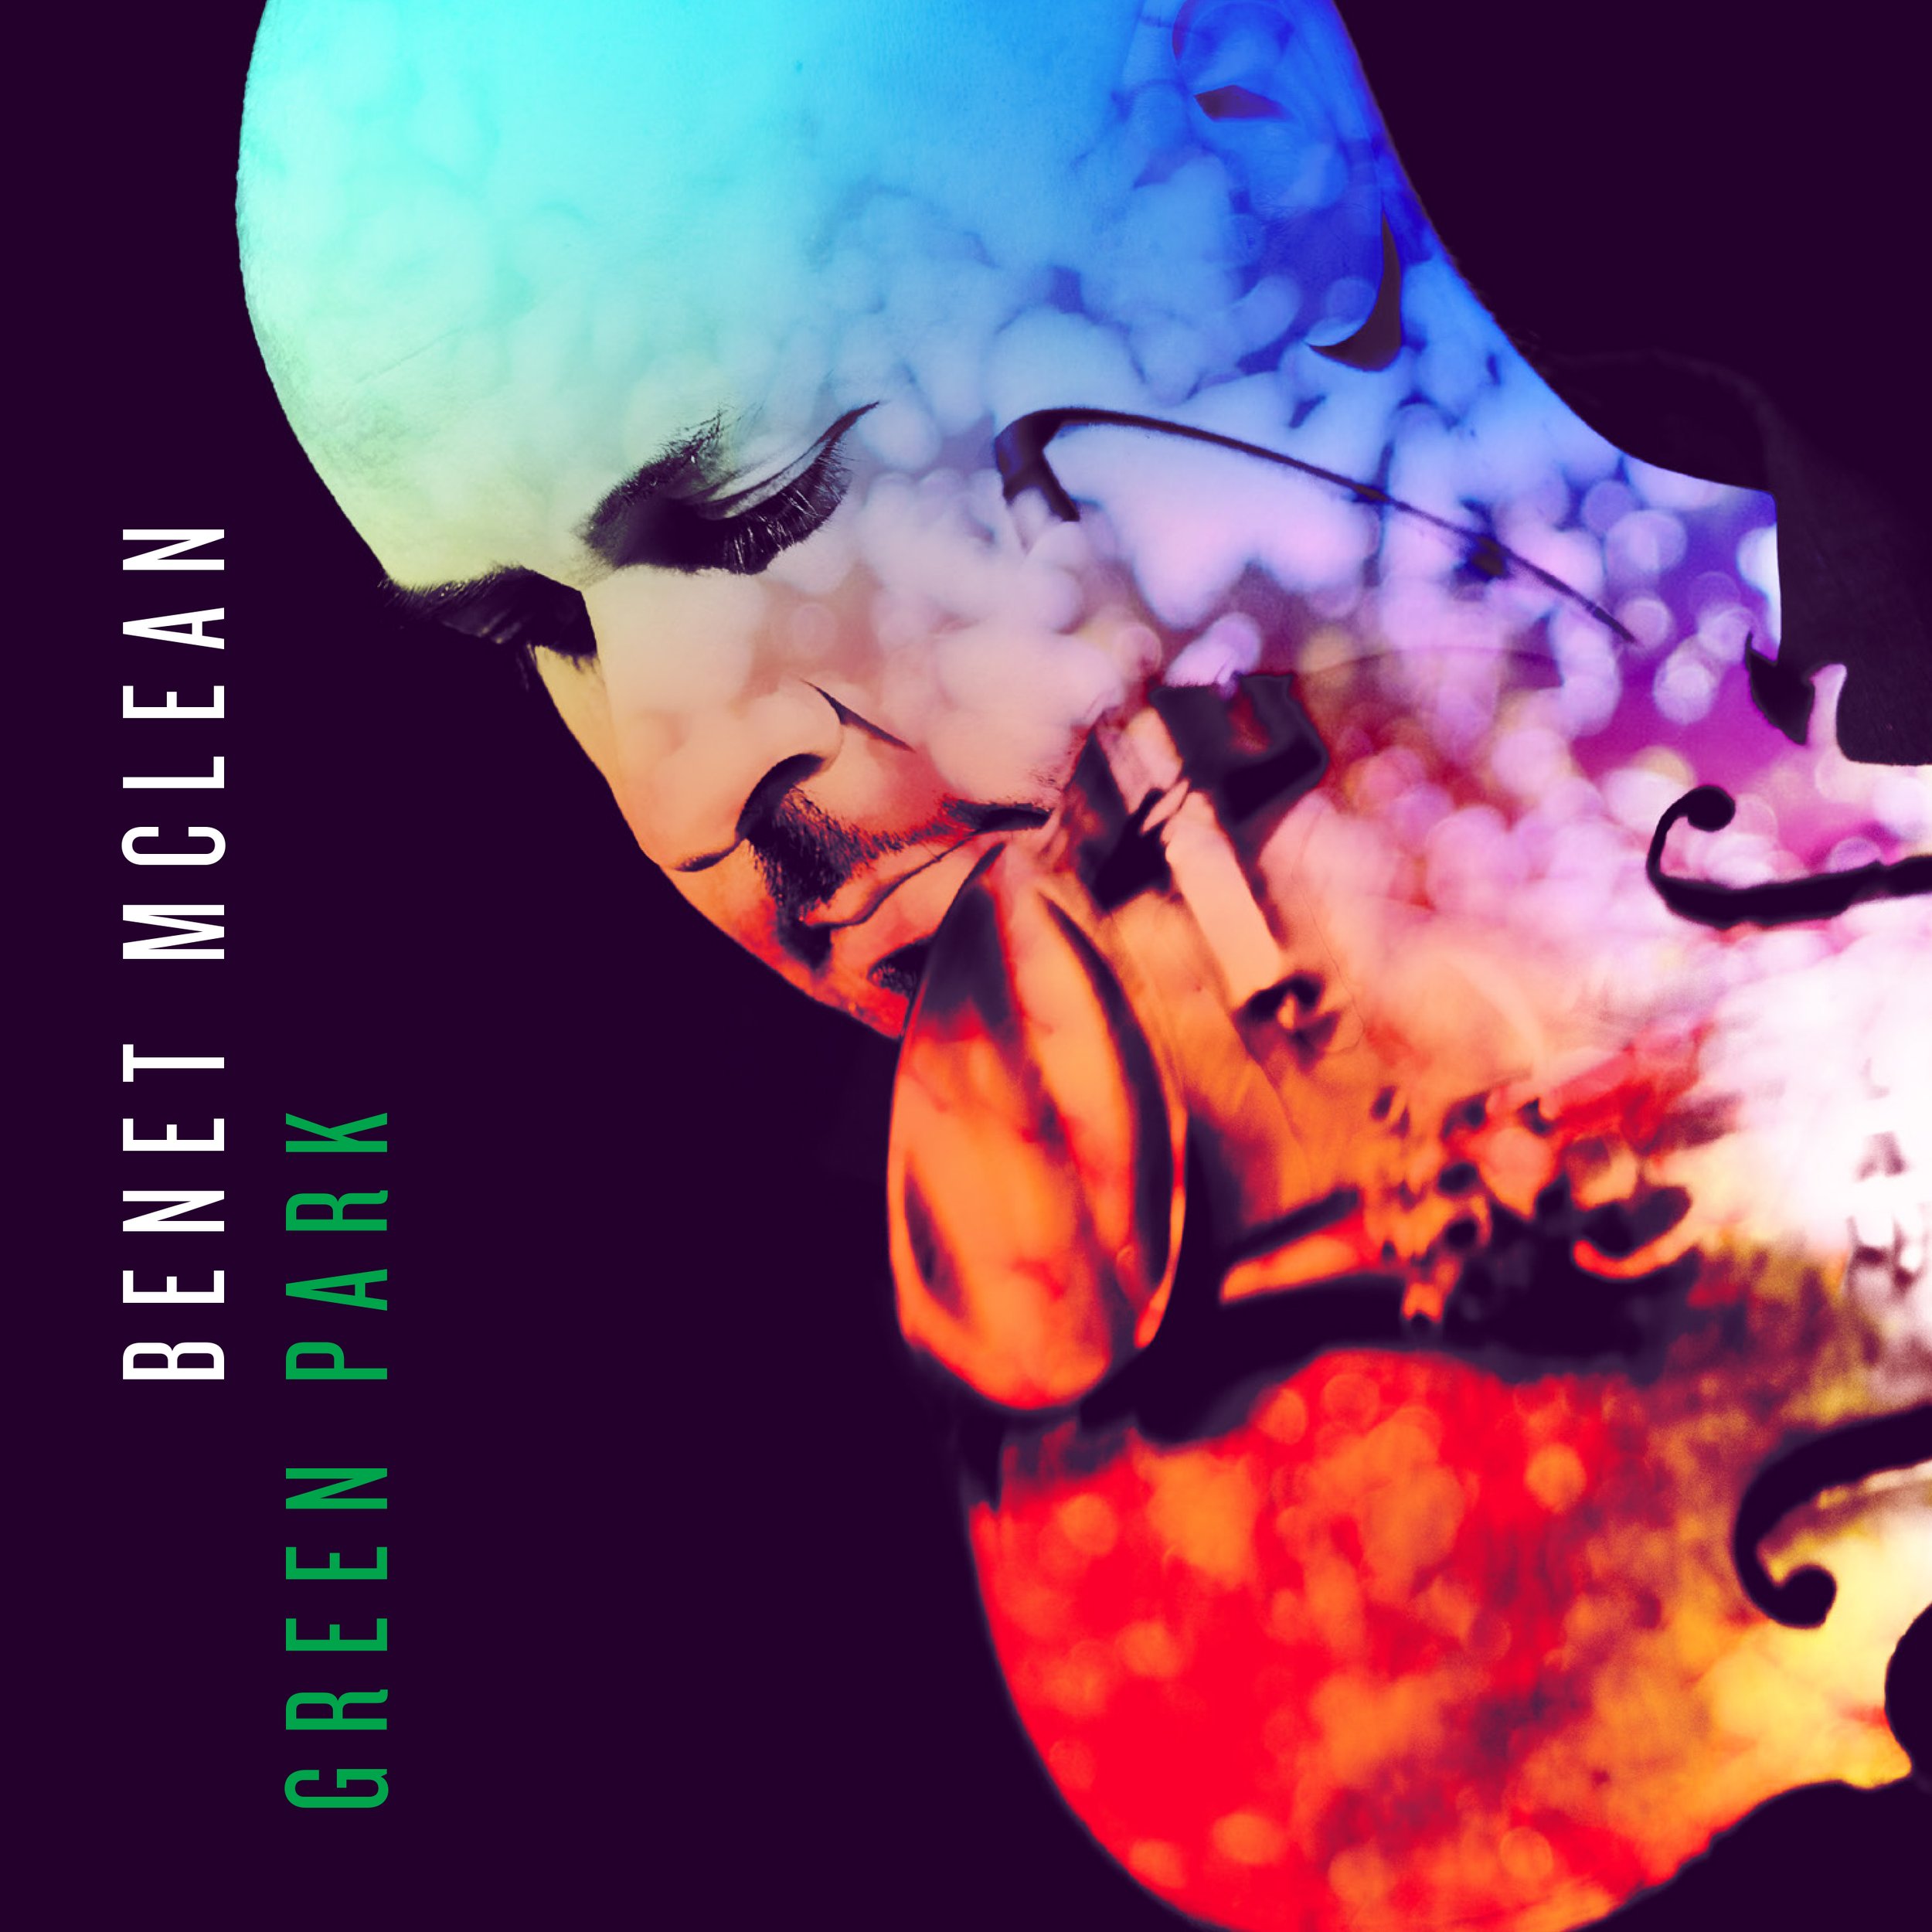 Benet McLean - Green Park album front cover square format.jpg